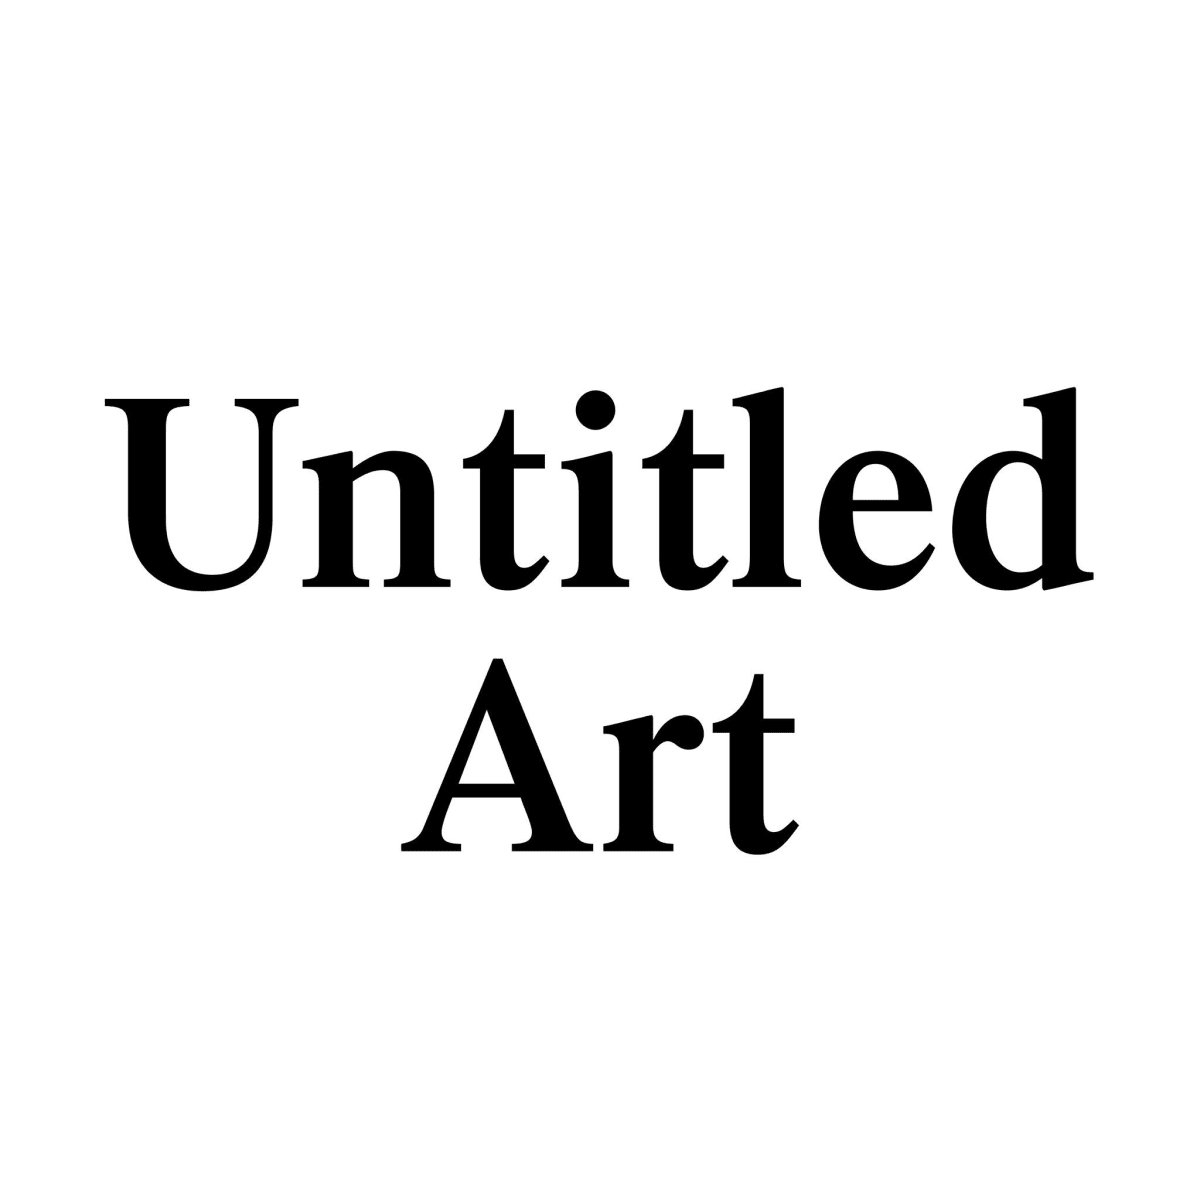 UNTITLED ART